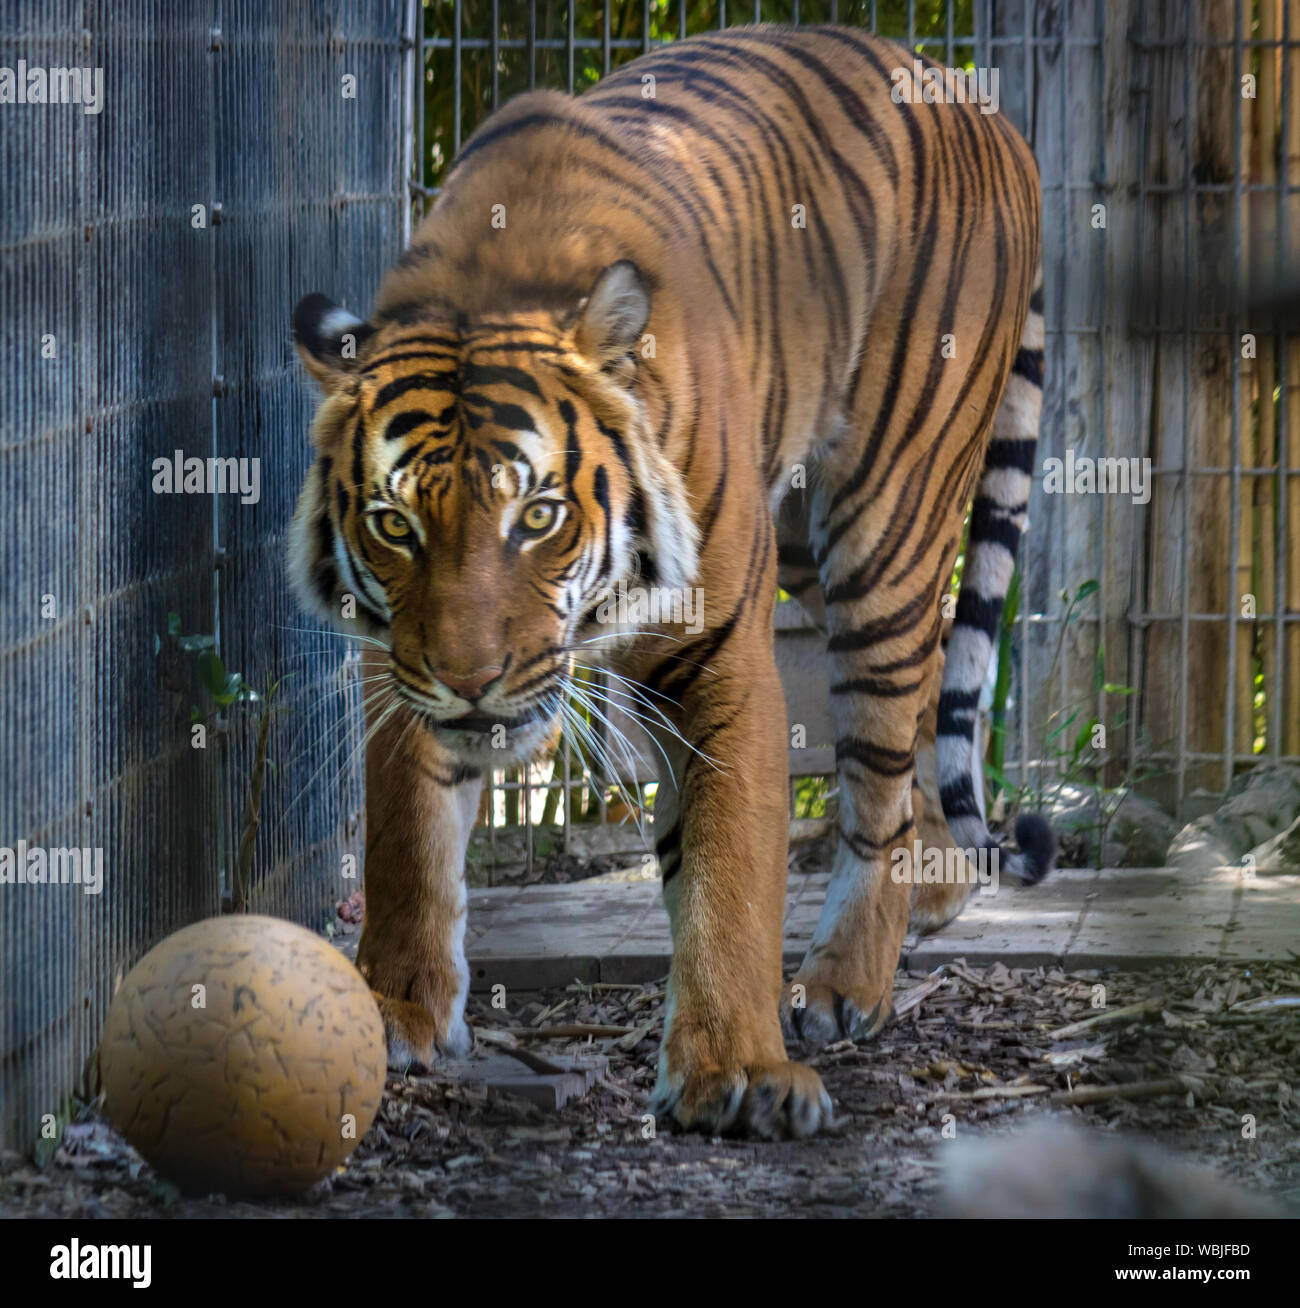 Tigre en jaula fotografías e imágenes de alta resolución - Alamy